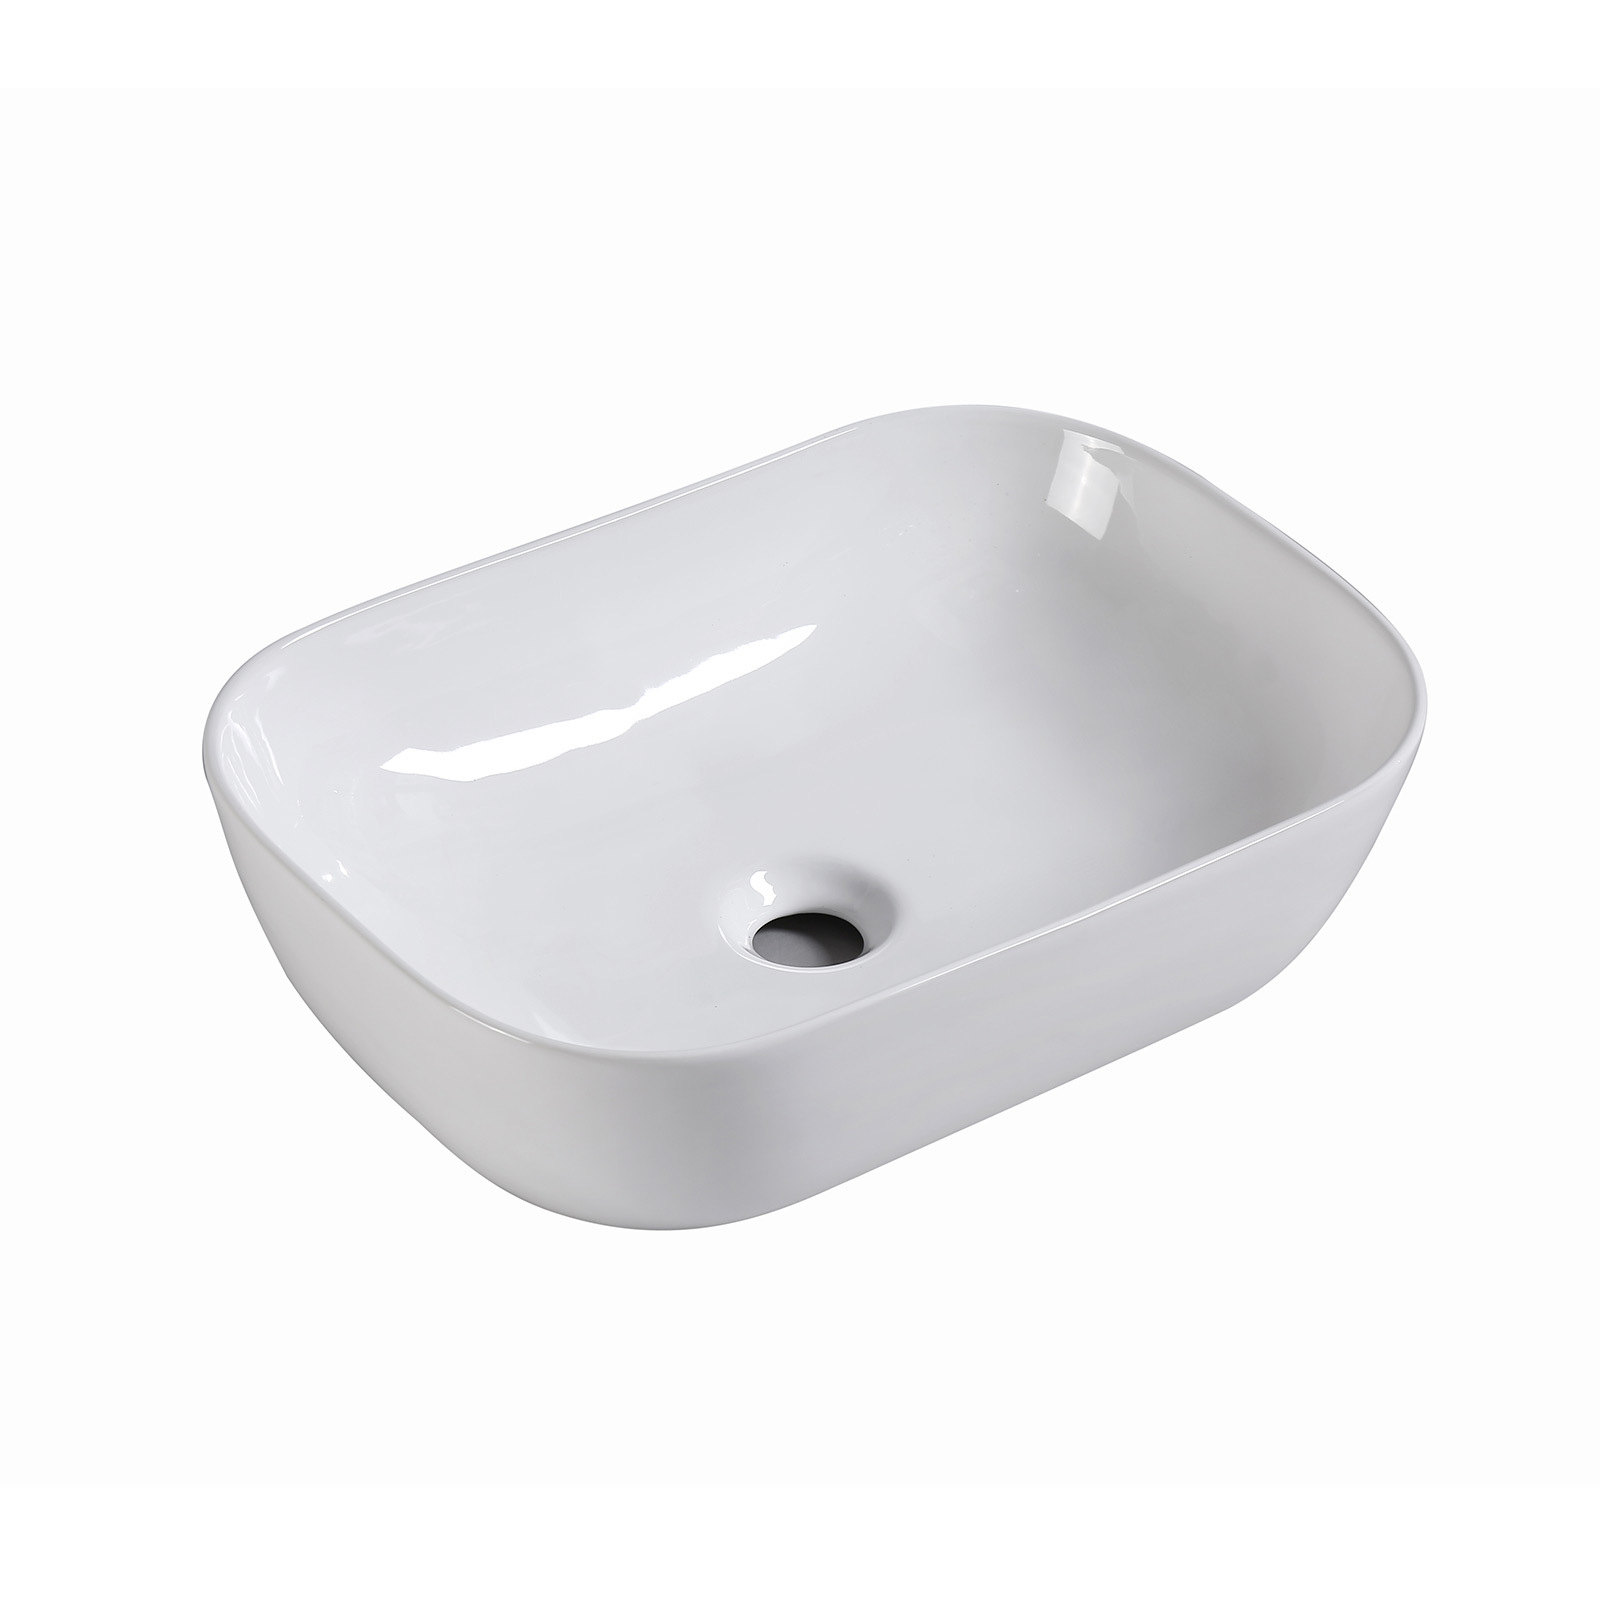 46 x 32.5 x 12.5cm Ceramic Bathroom Basin Rectangular - WHITE